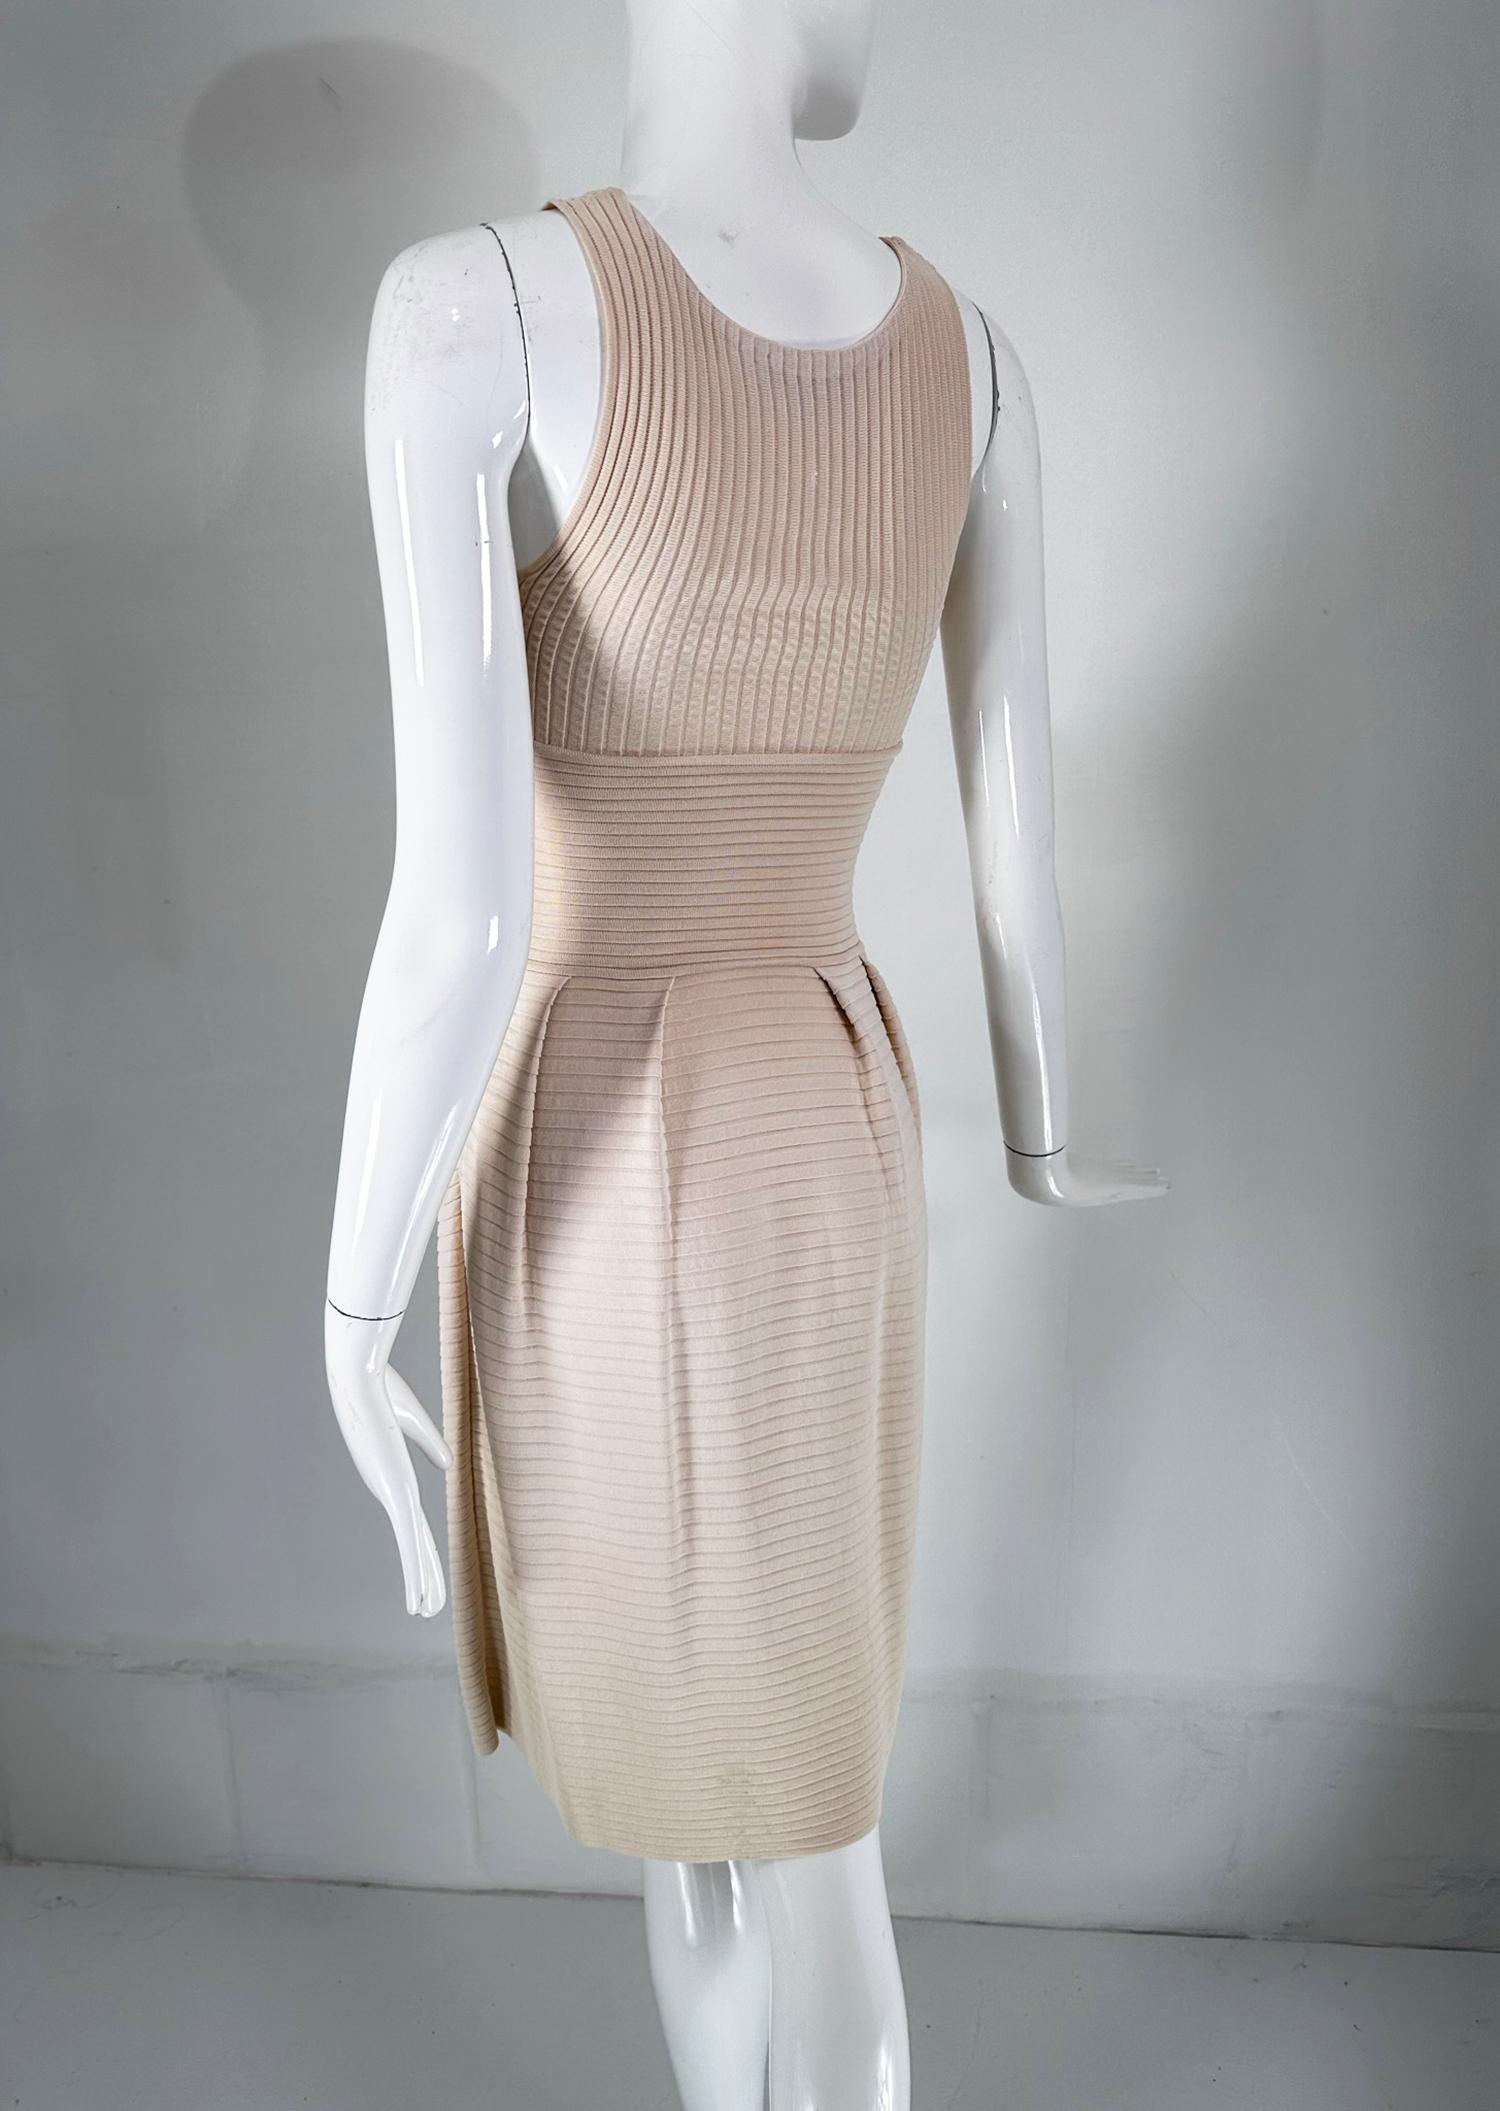 Christian Dior Paris Ribbed Knit Beige Tank Dress 2010 For Sale 5